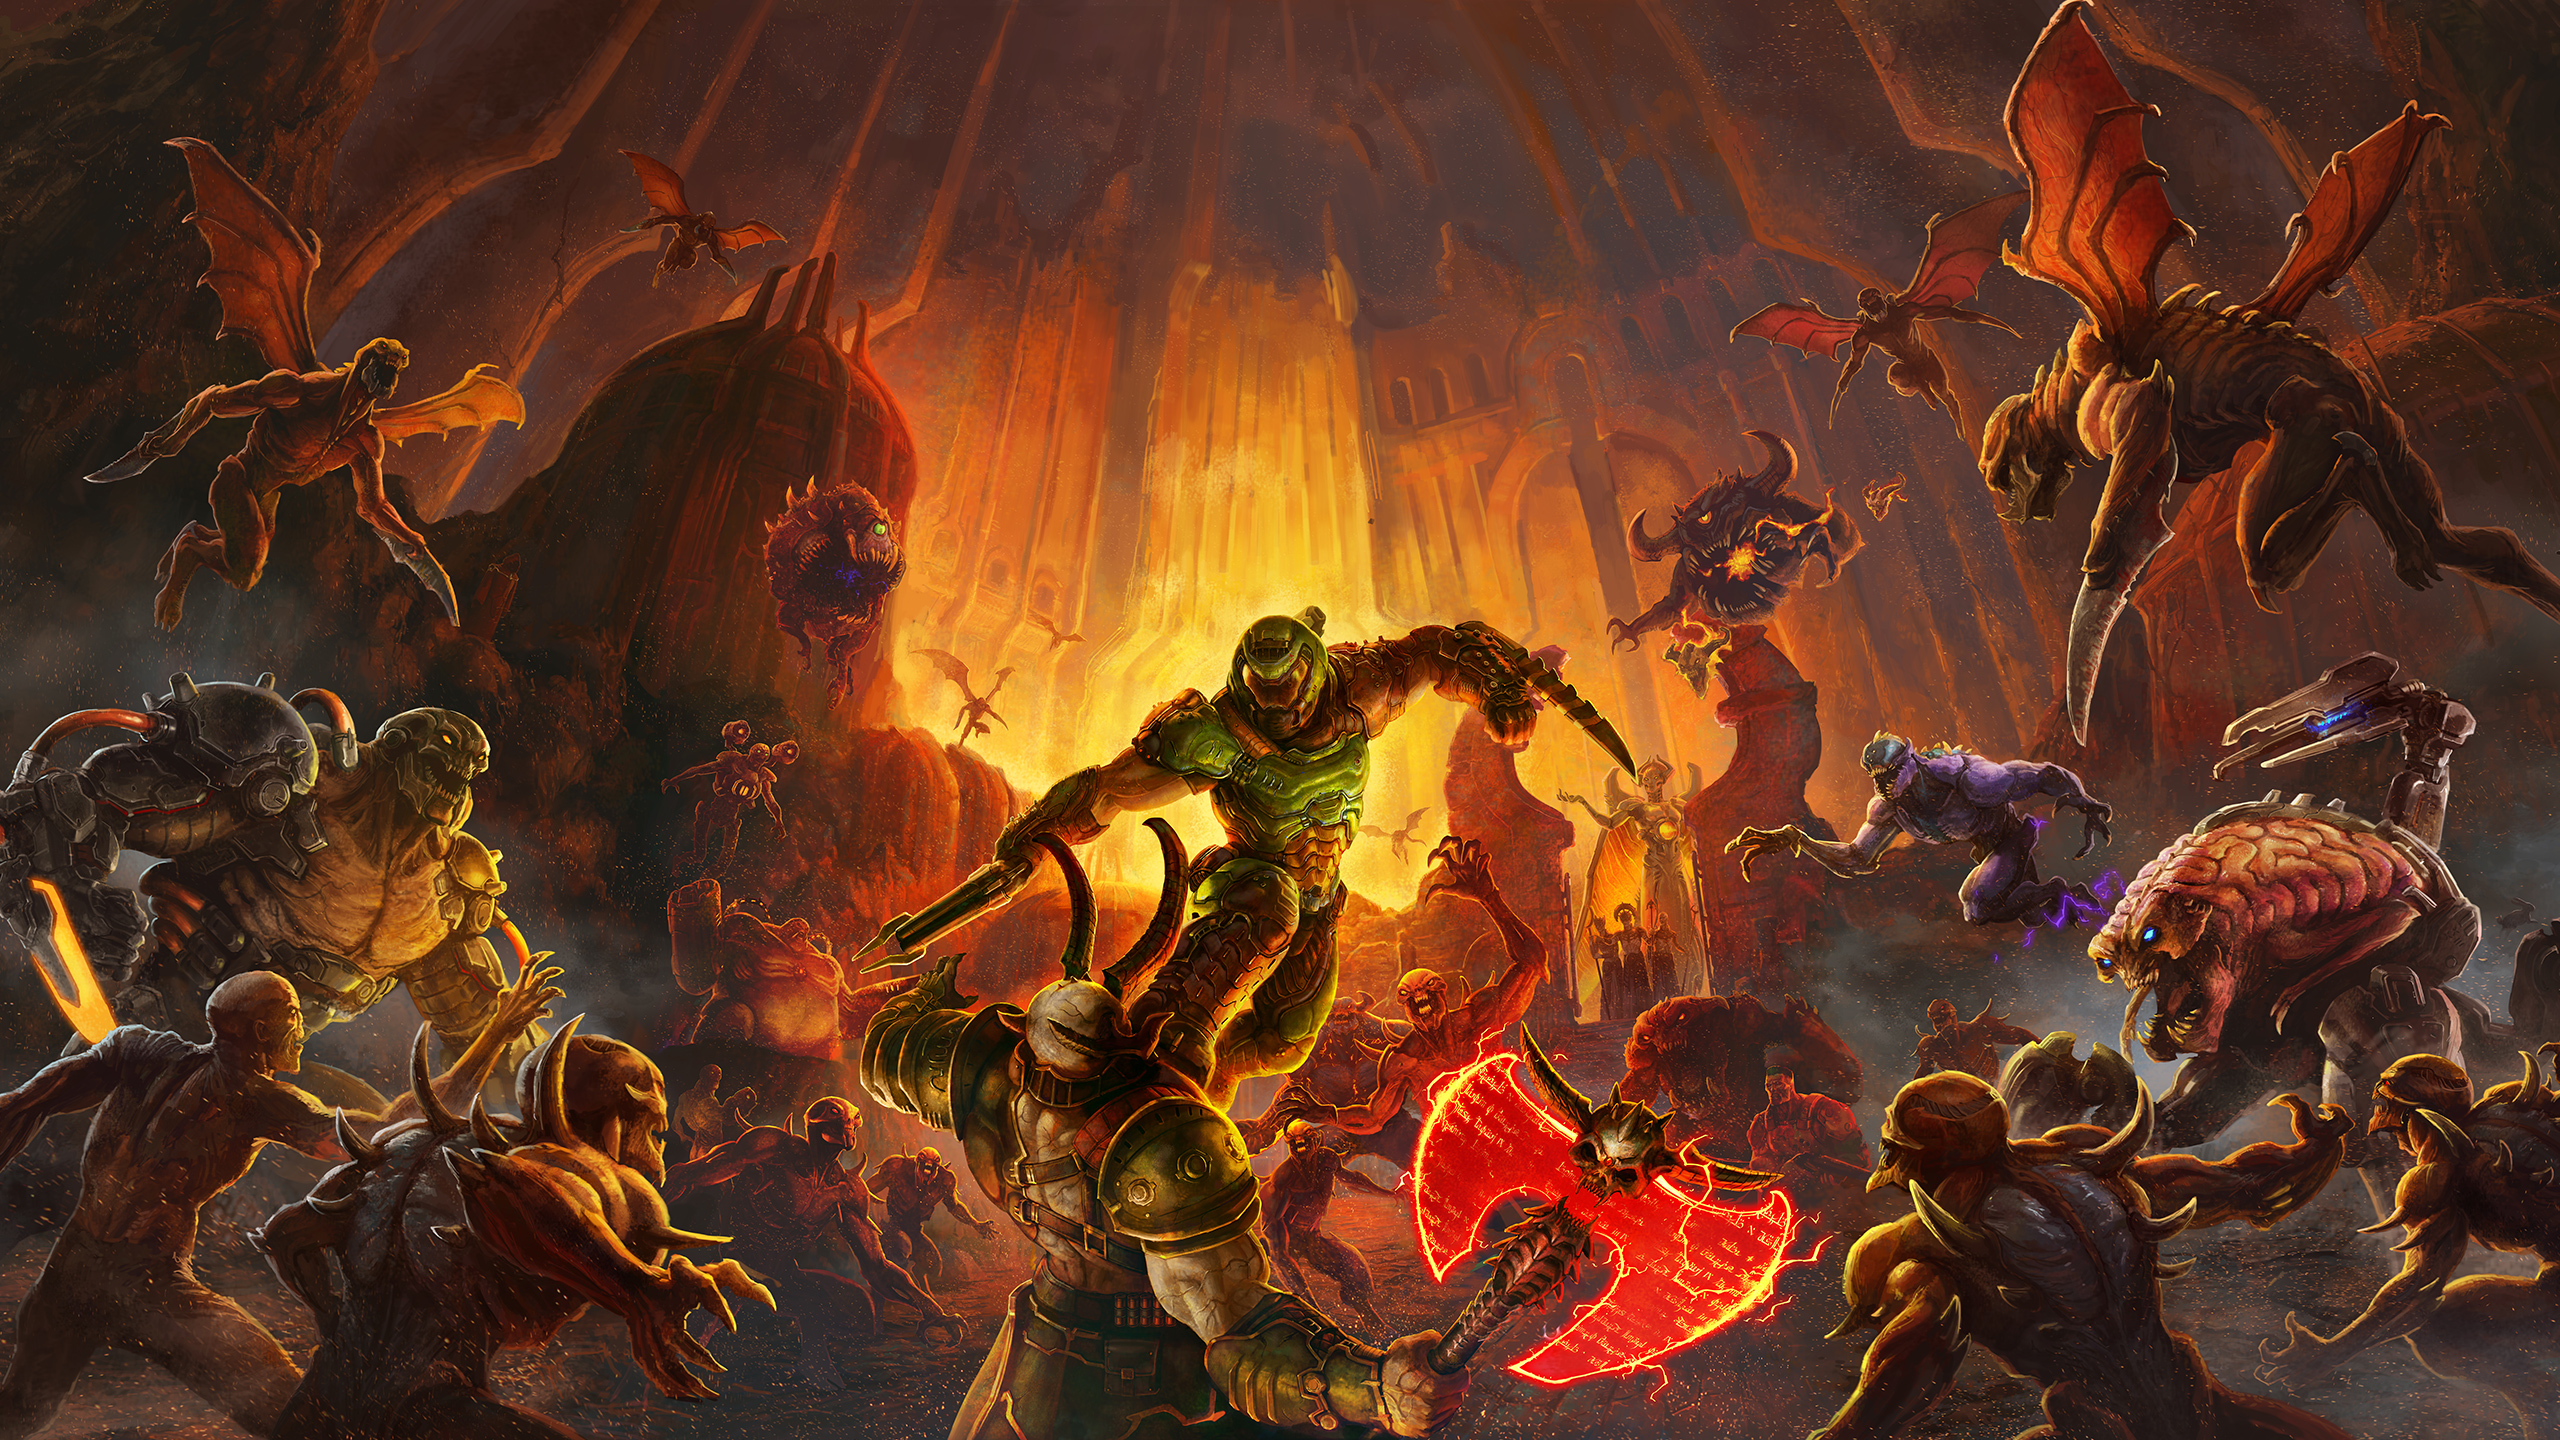 Wallpaper Doom Doomguy Bethesda Icon of Sin Xbox One Background   Download Free Image